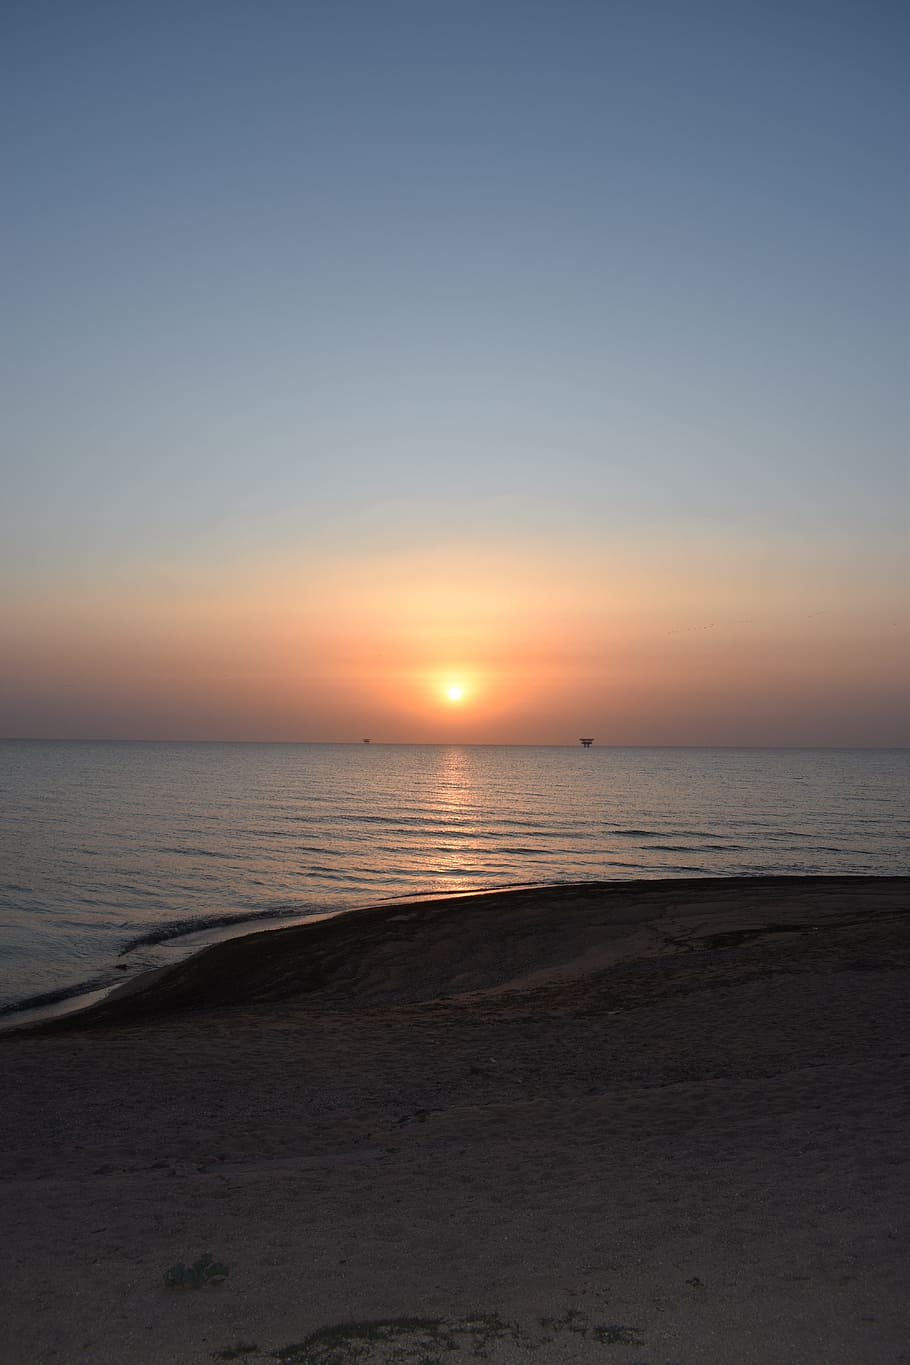 mañana, amanecer, mar, cielo, puesta de sol, agua, paisajes: naturaleza, belleza en la naturaleza, tranquilidad, horizonte sobre el agua